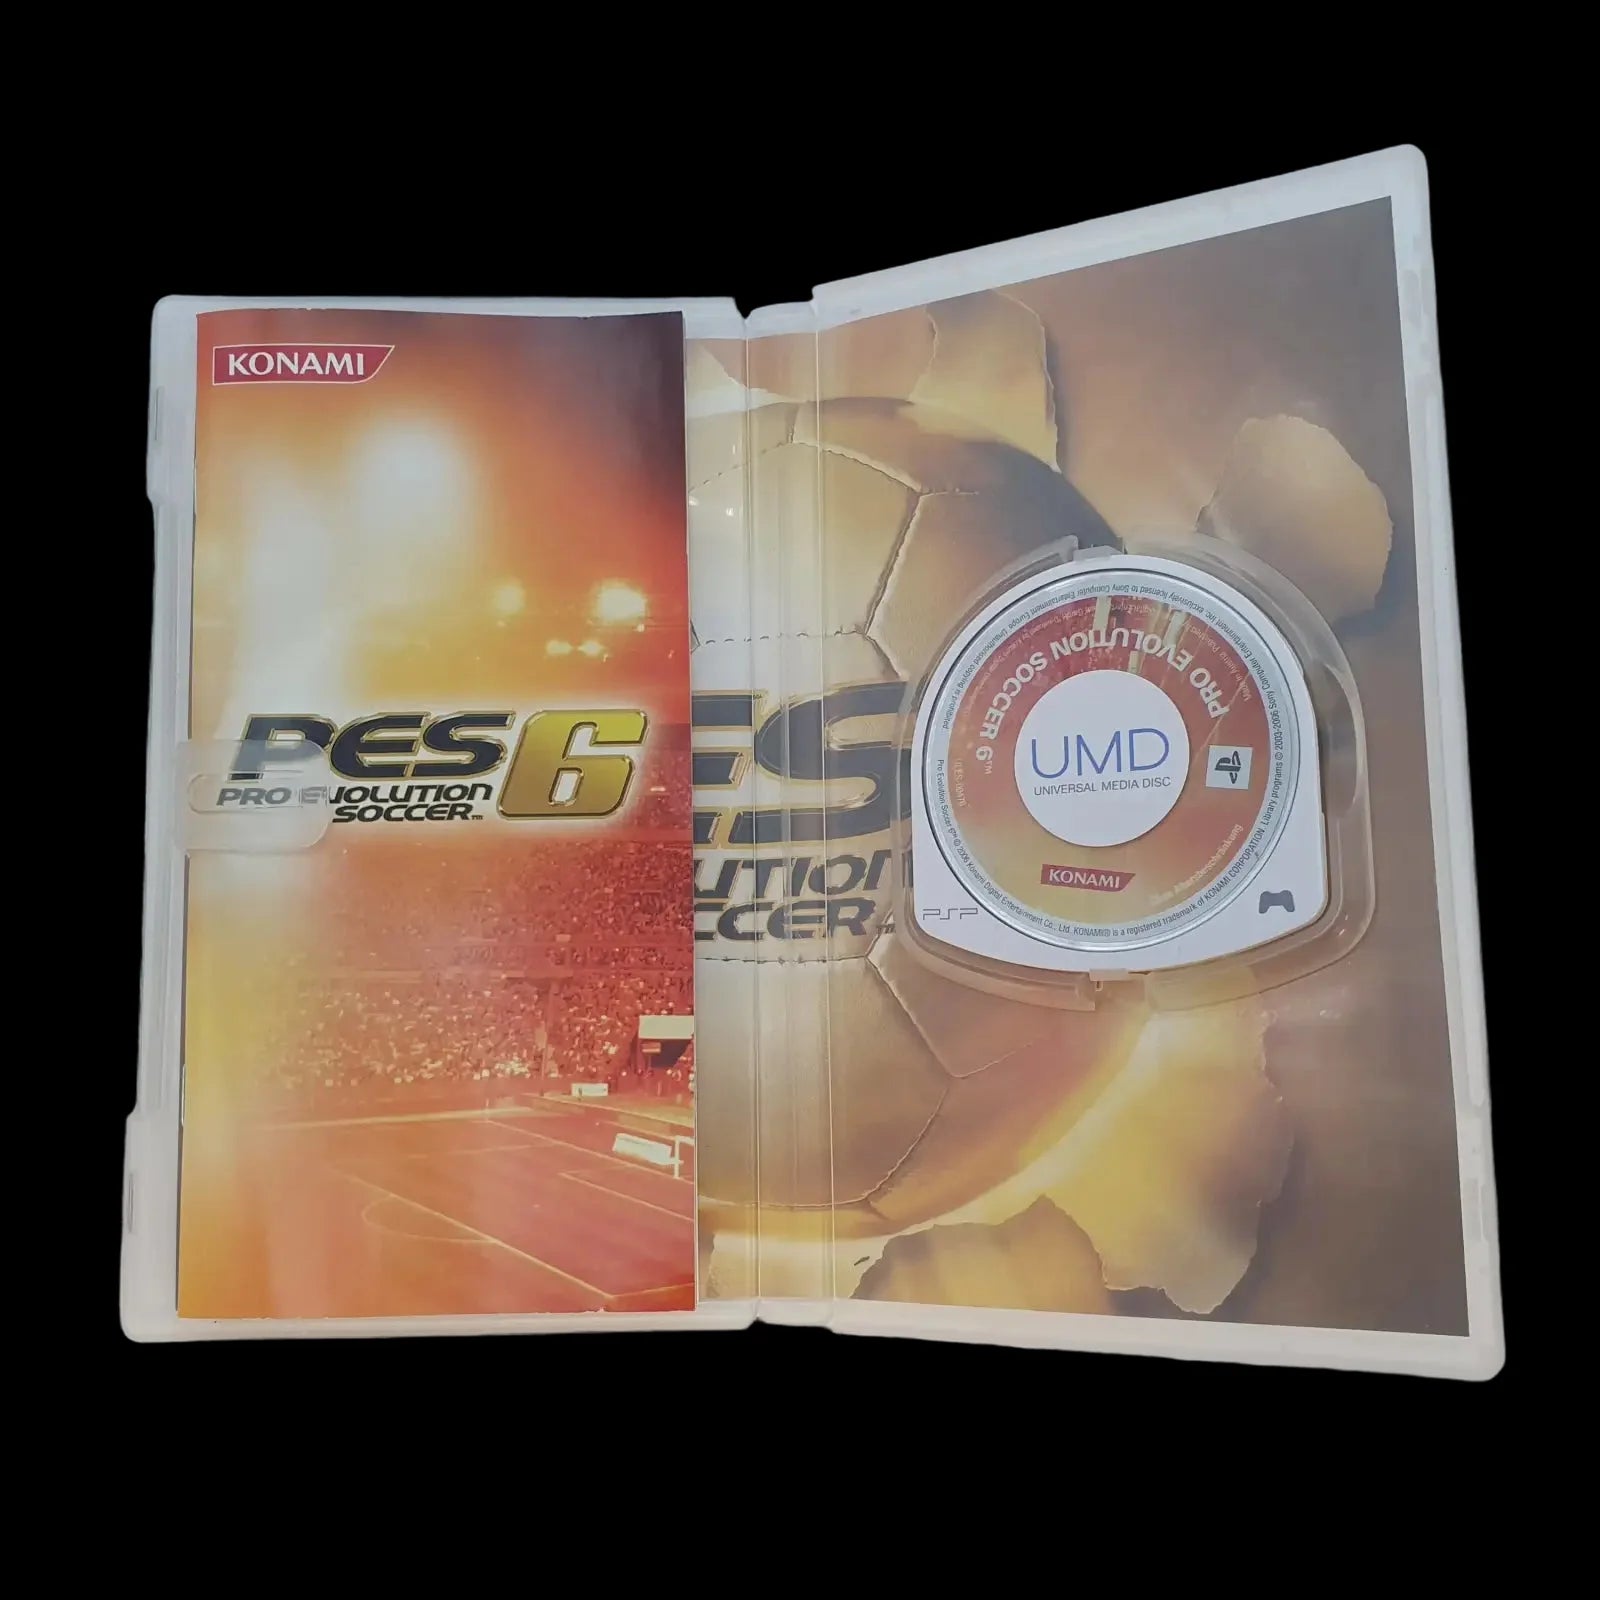 Pro Evolution Soccer 6 Sony Playstation Portable Psp Konami